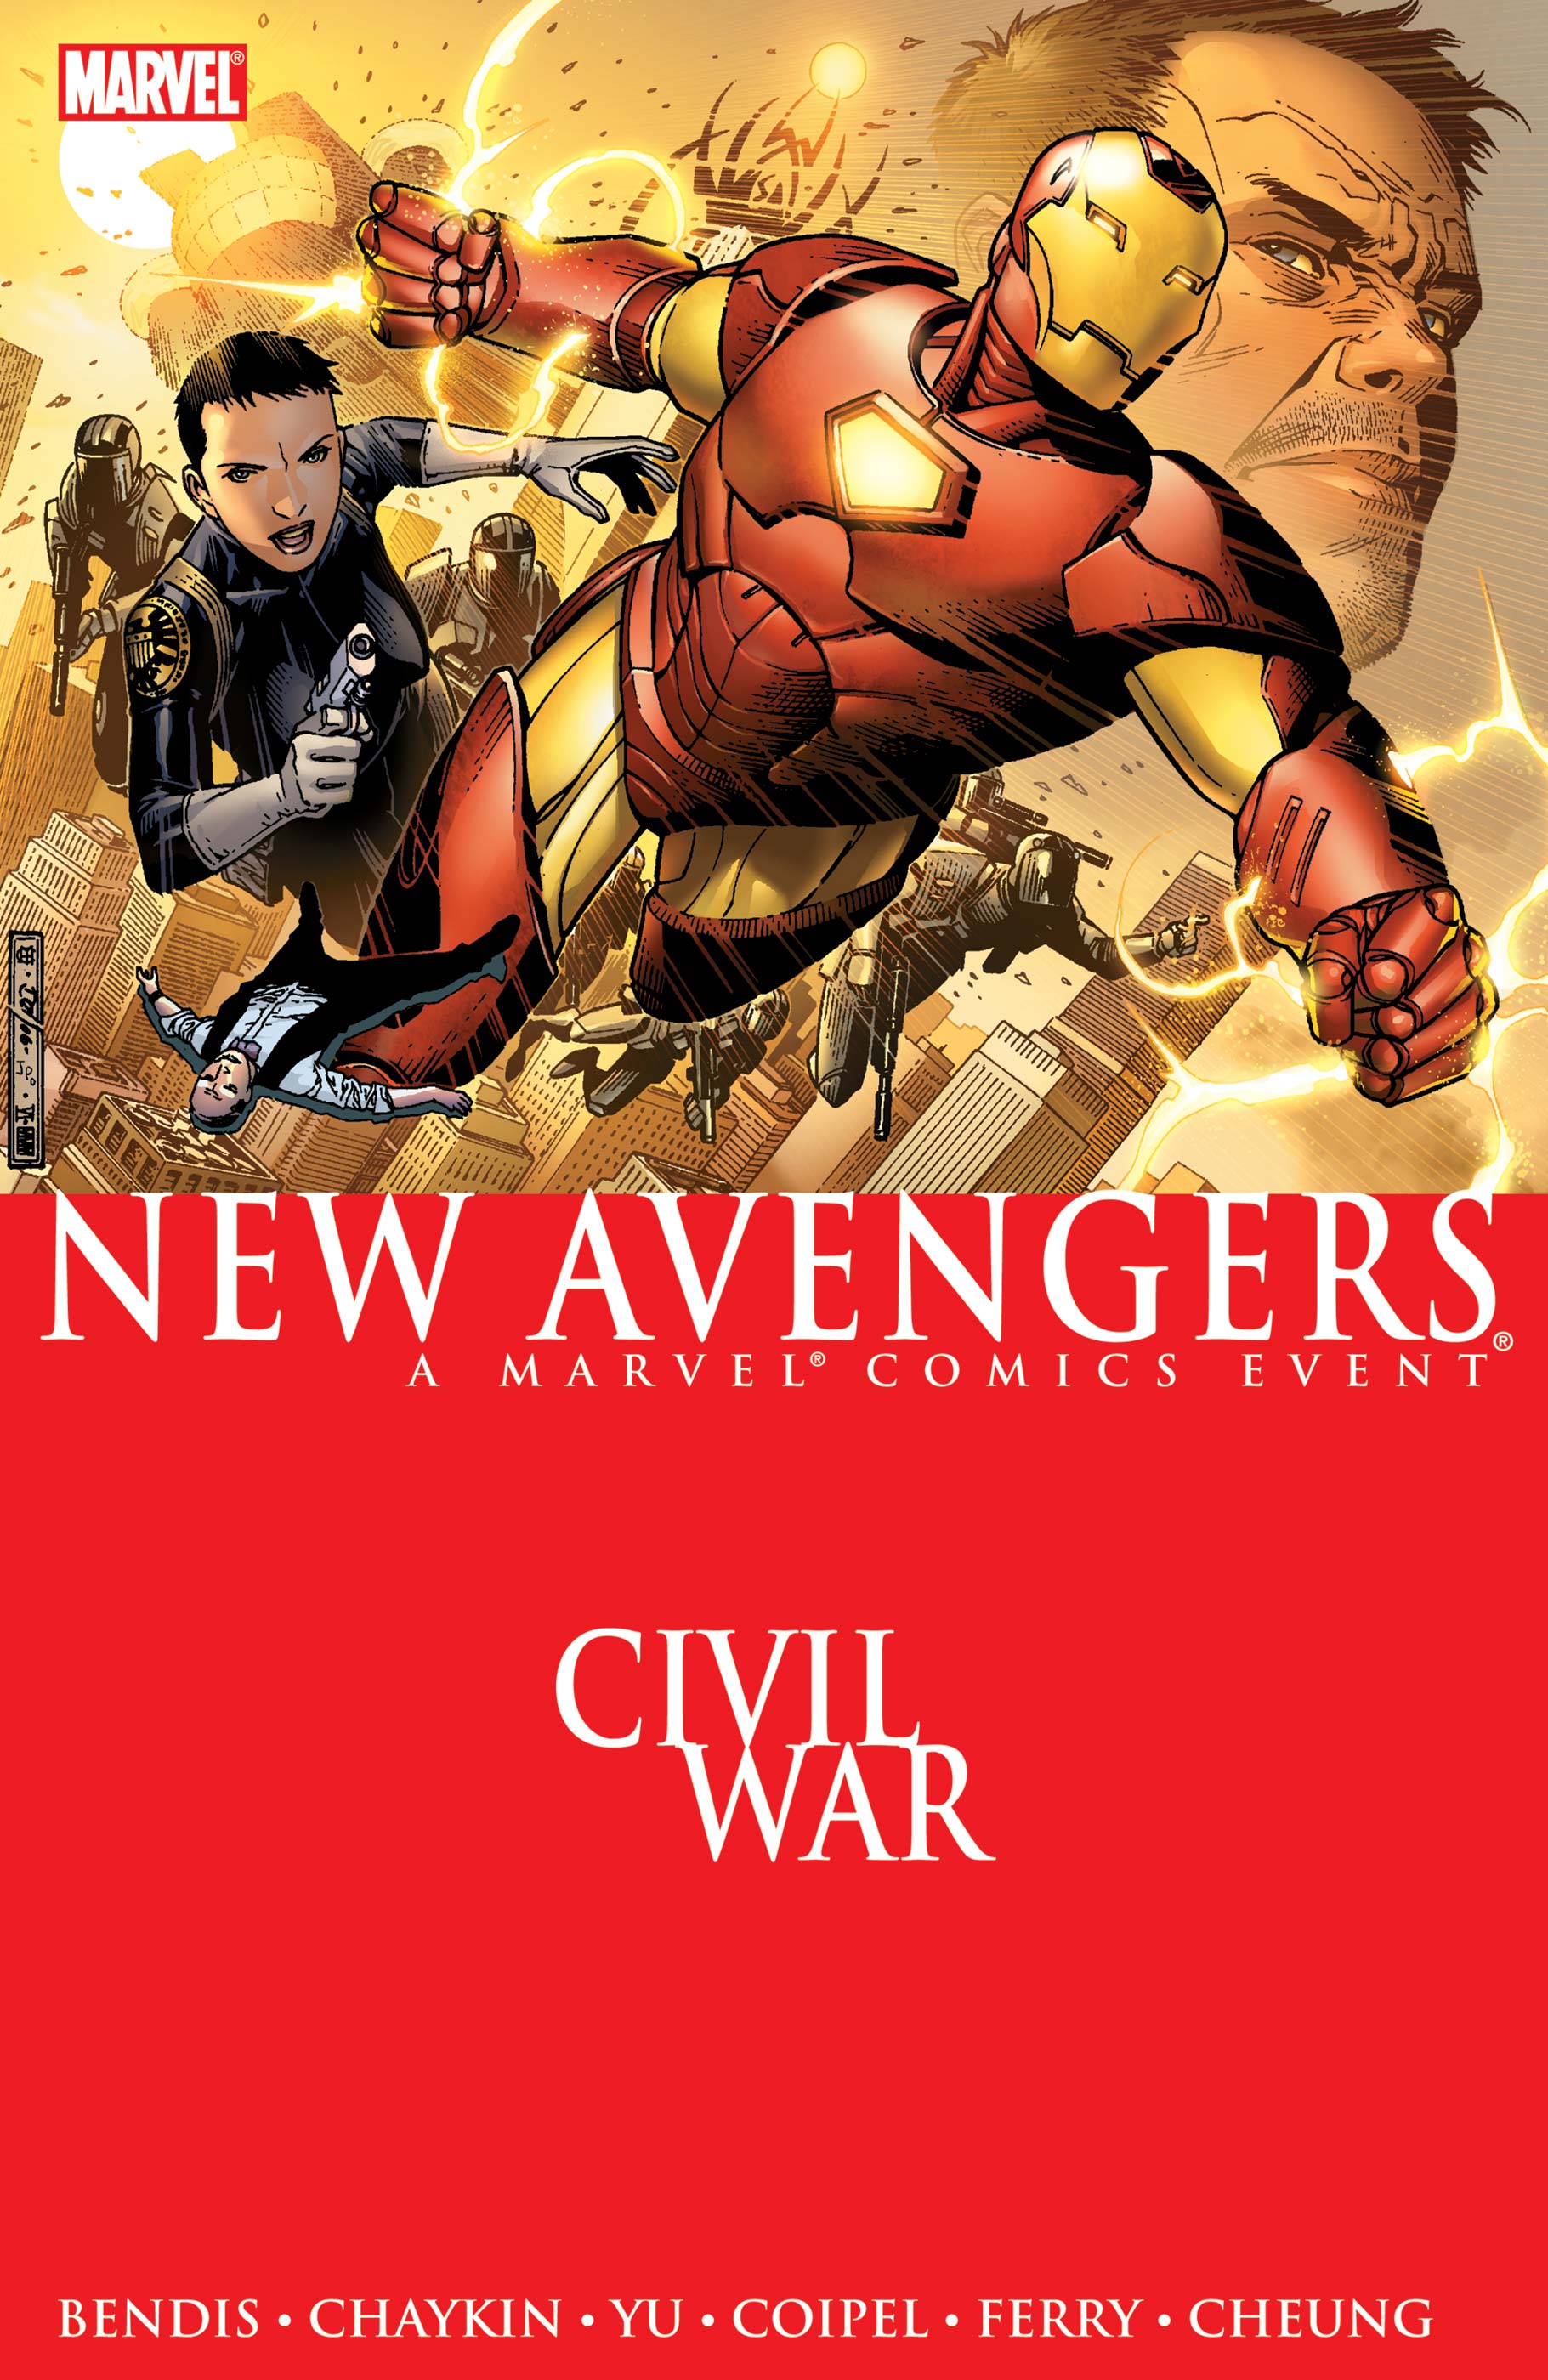 New Avengers Vol. 5: Civil War (Trade Paperback)